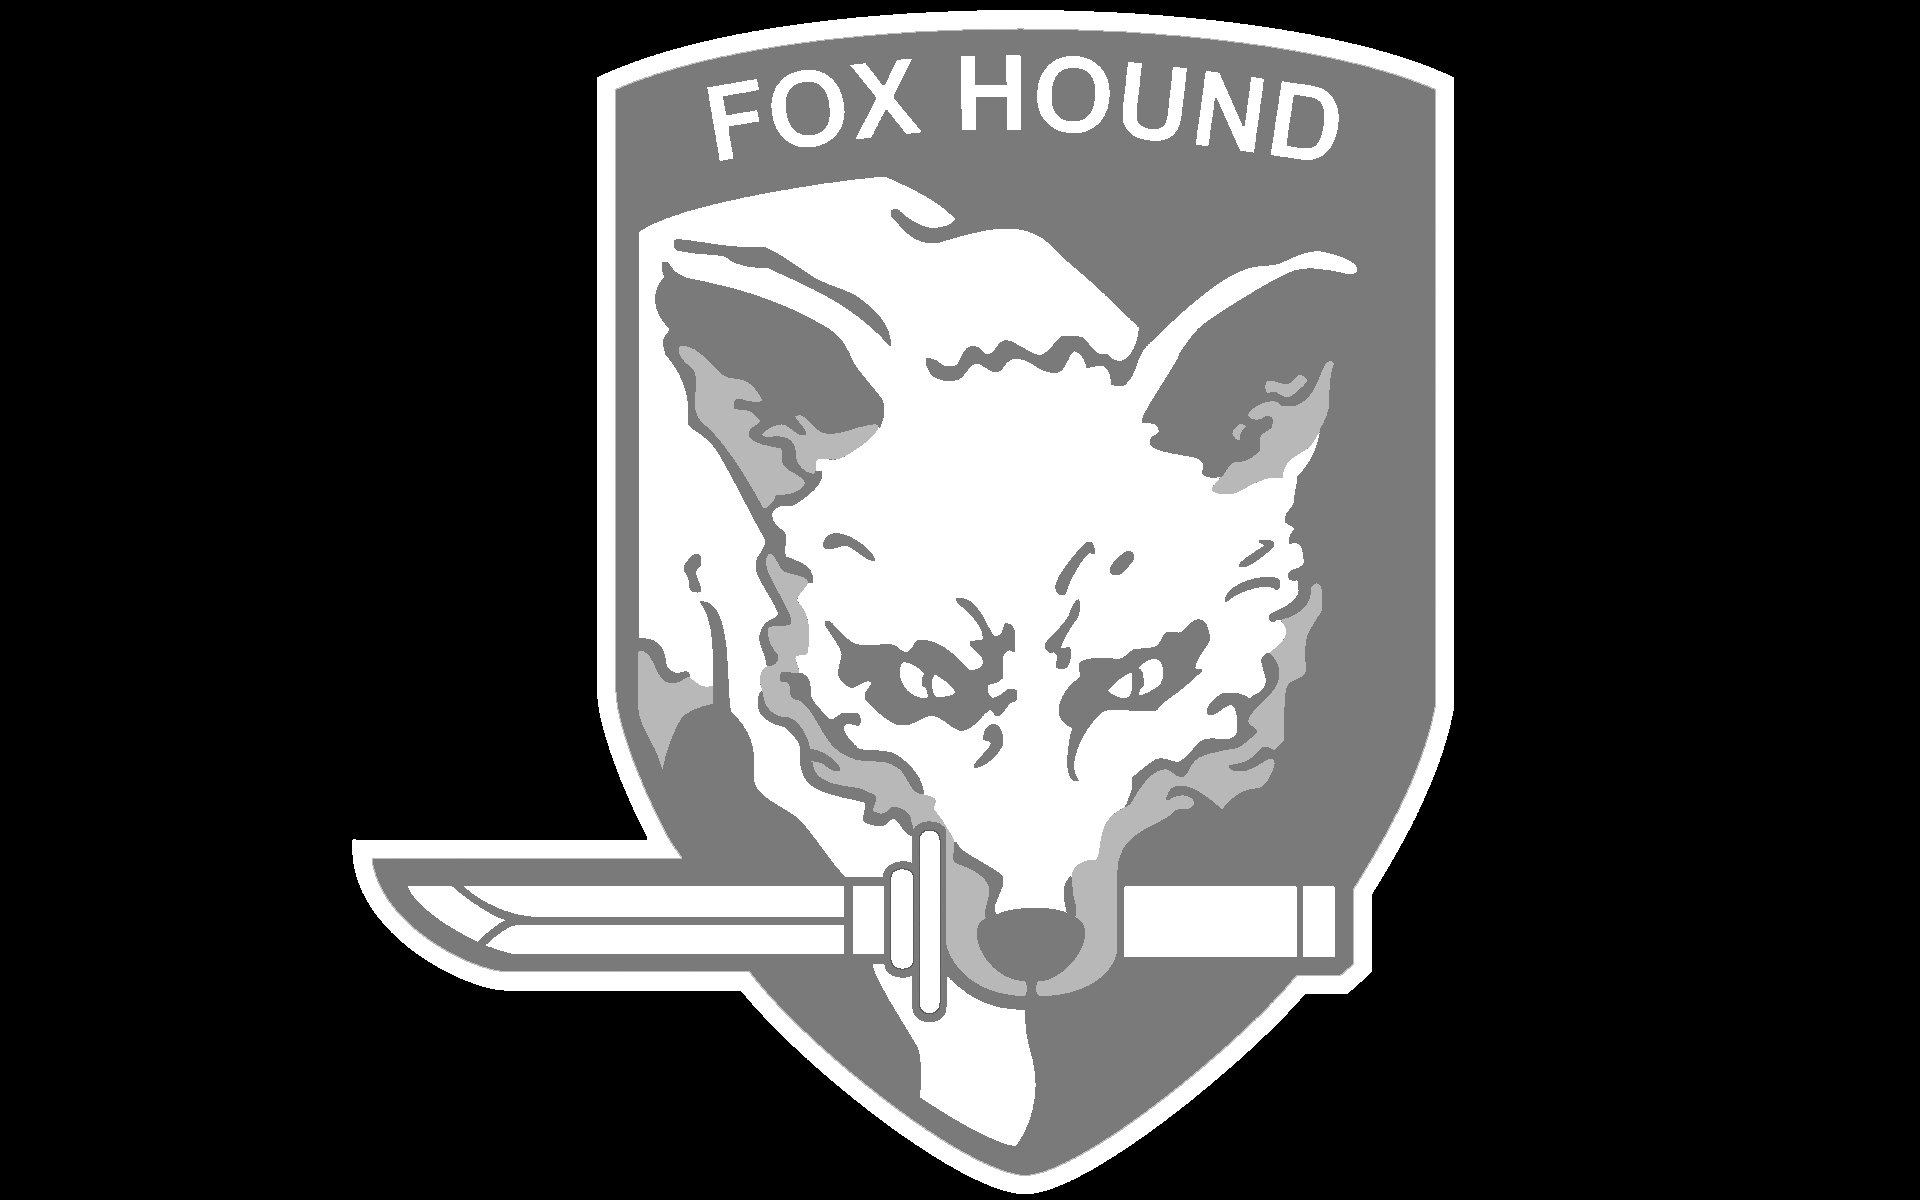 Foxhound Mgs Wallpaper